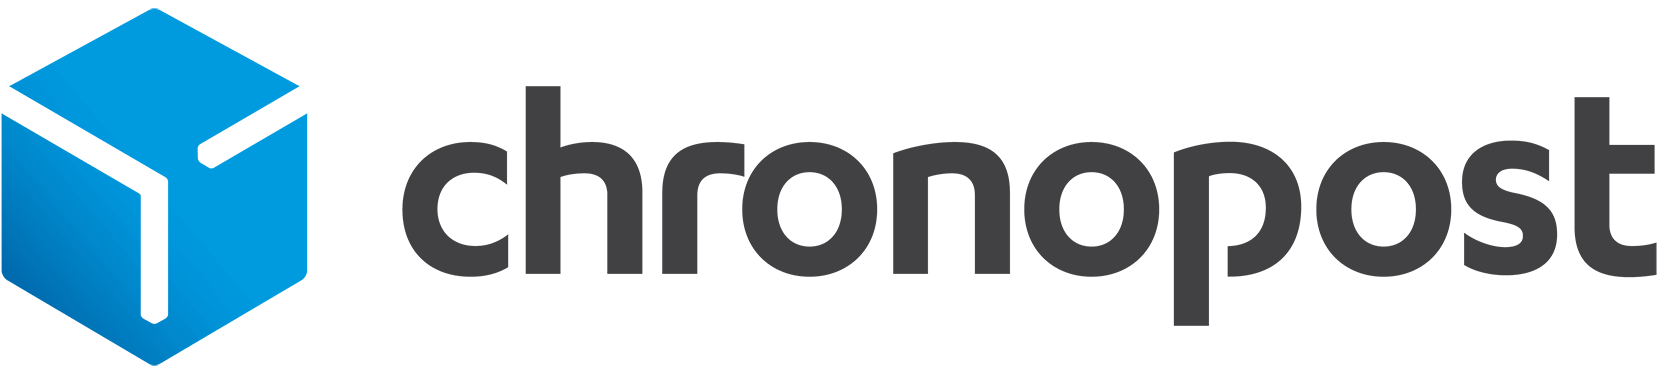 Chronopost logo 2015